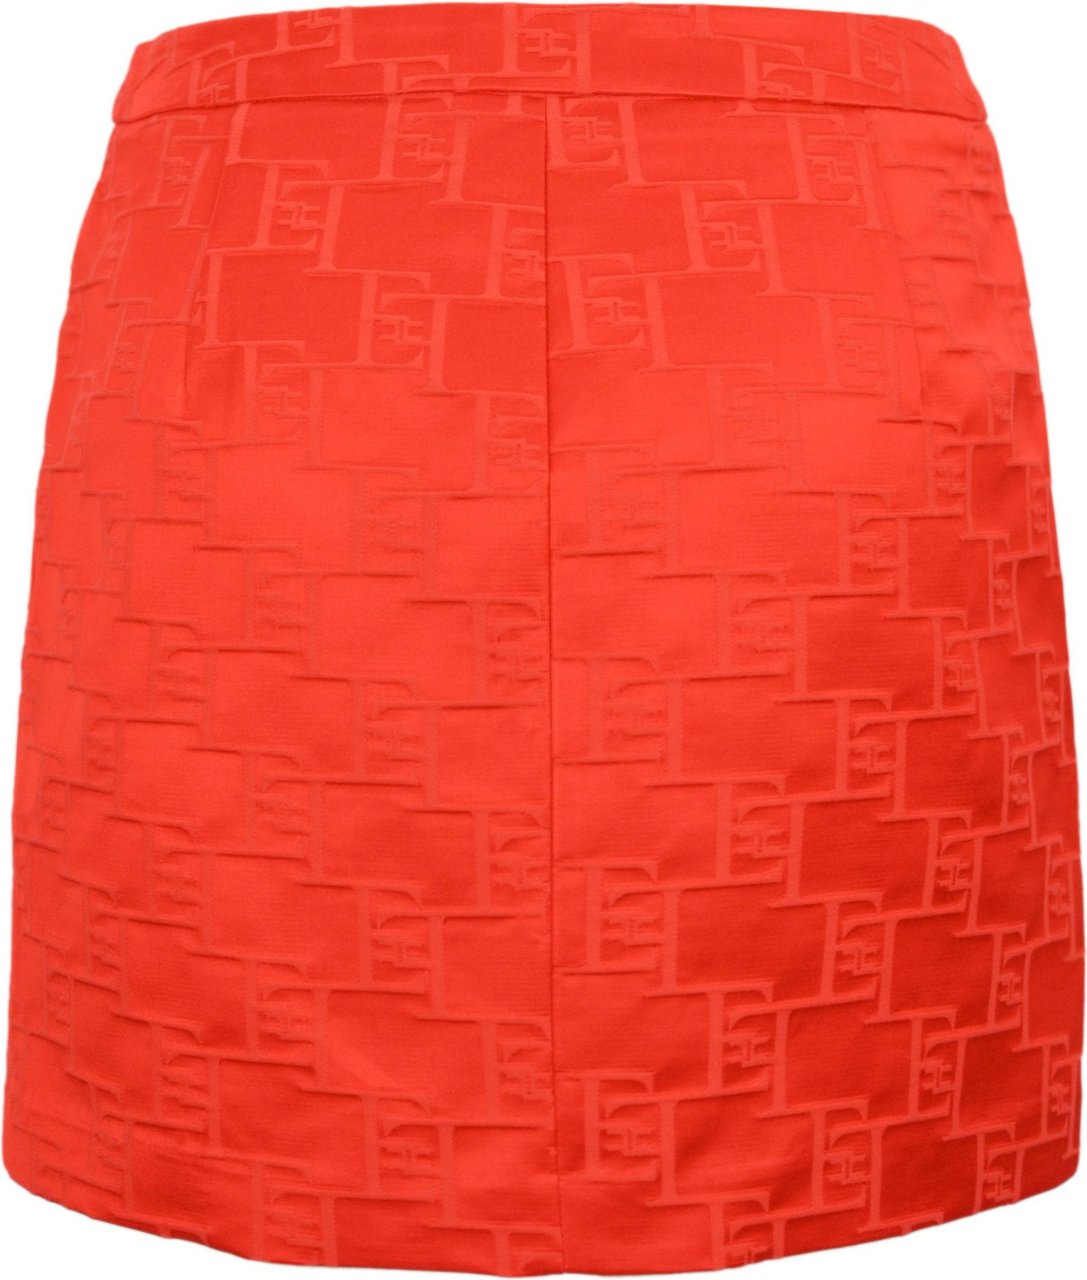 Elisabetta Franchi Skirts Coral Red Rood